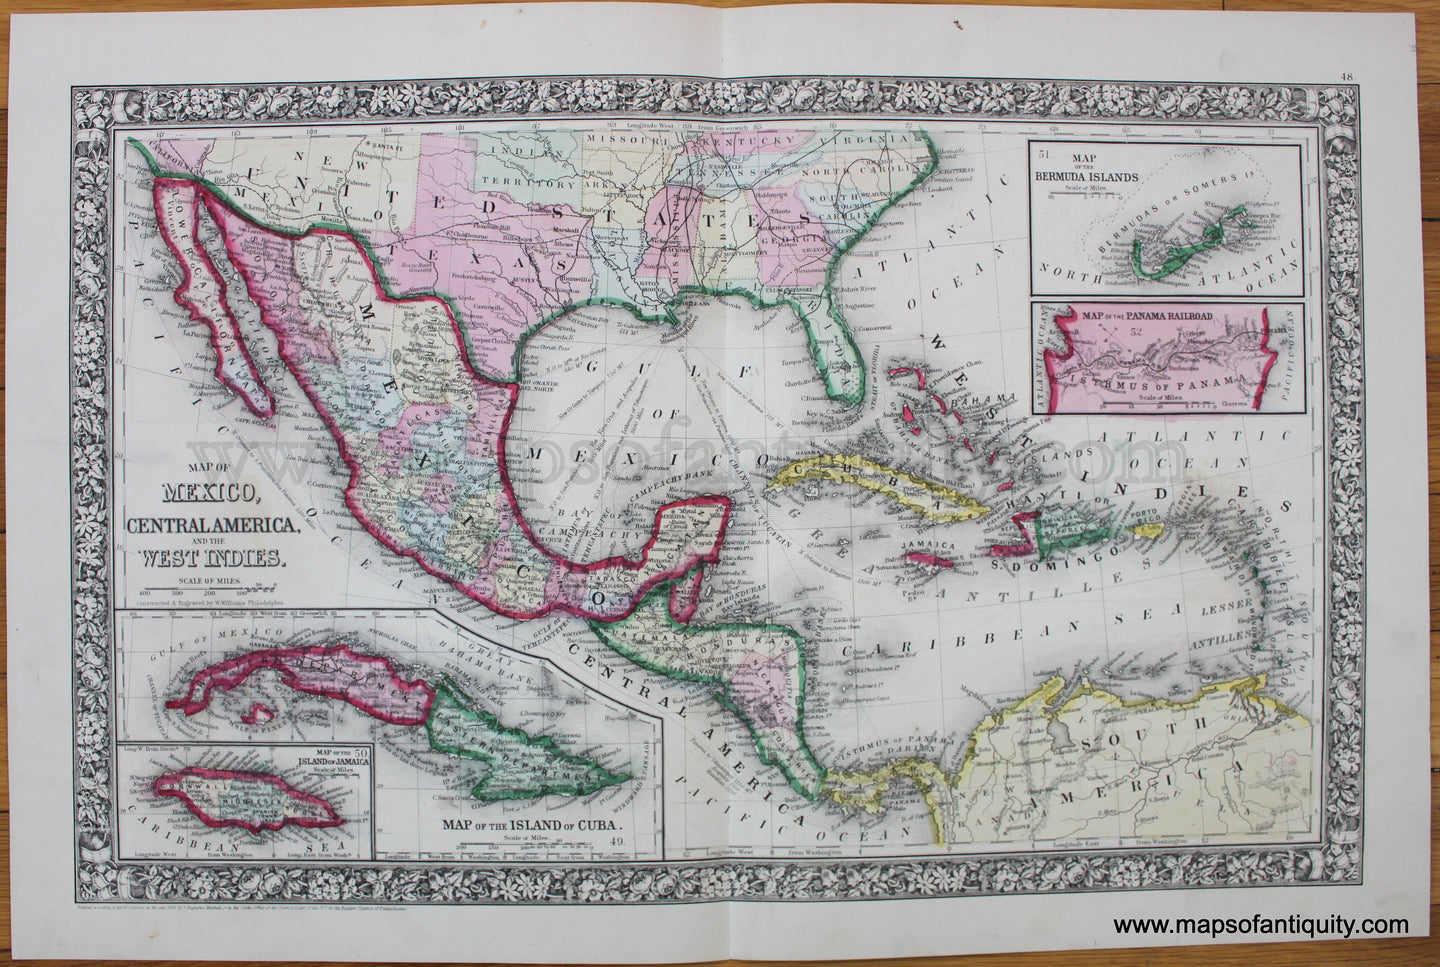 Antique-Map-Caribbean-Central-America-Florida-bermuda-panama-jamaica-cuba-mexico-west-indies-mitchell-1860-1800s-19th-century